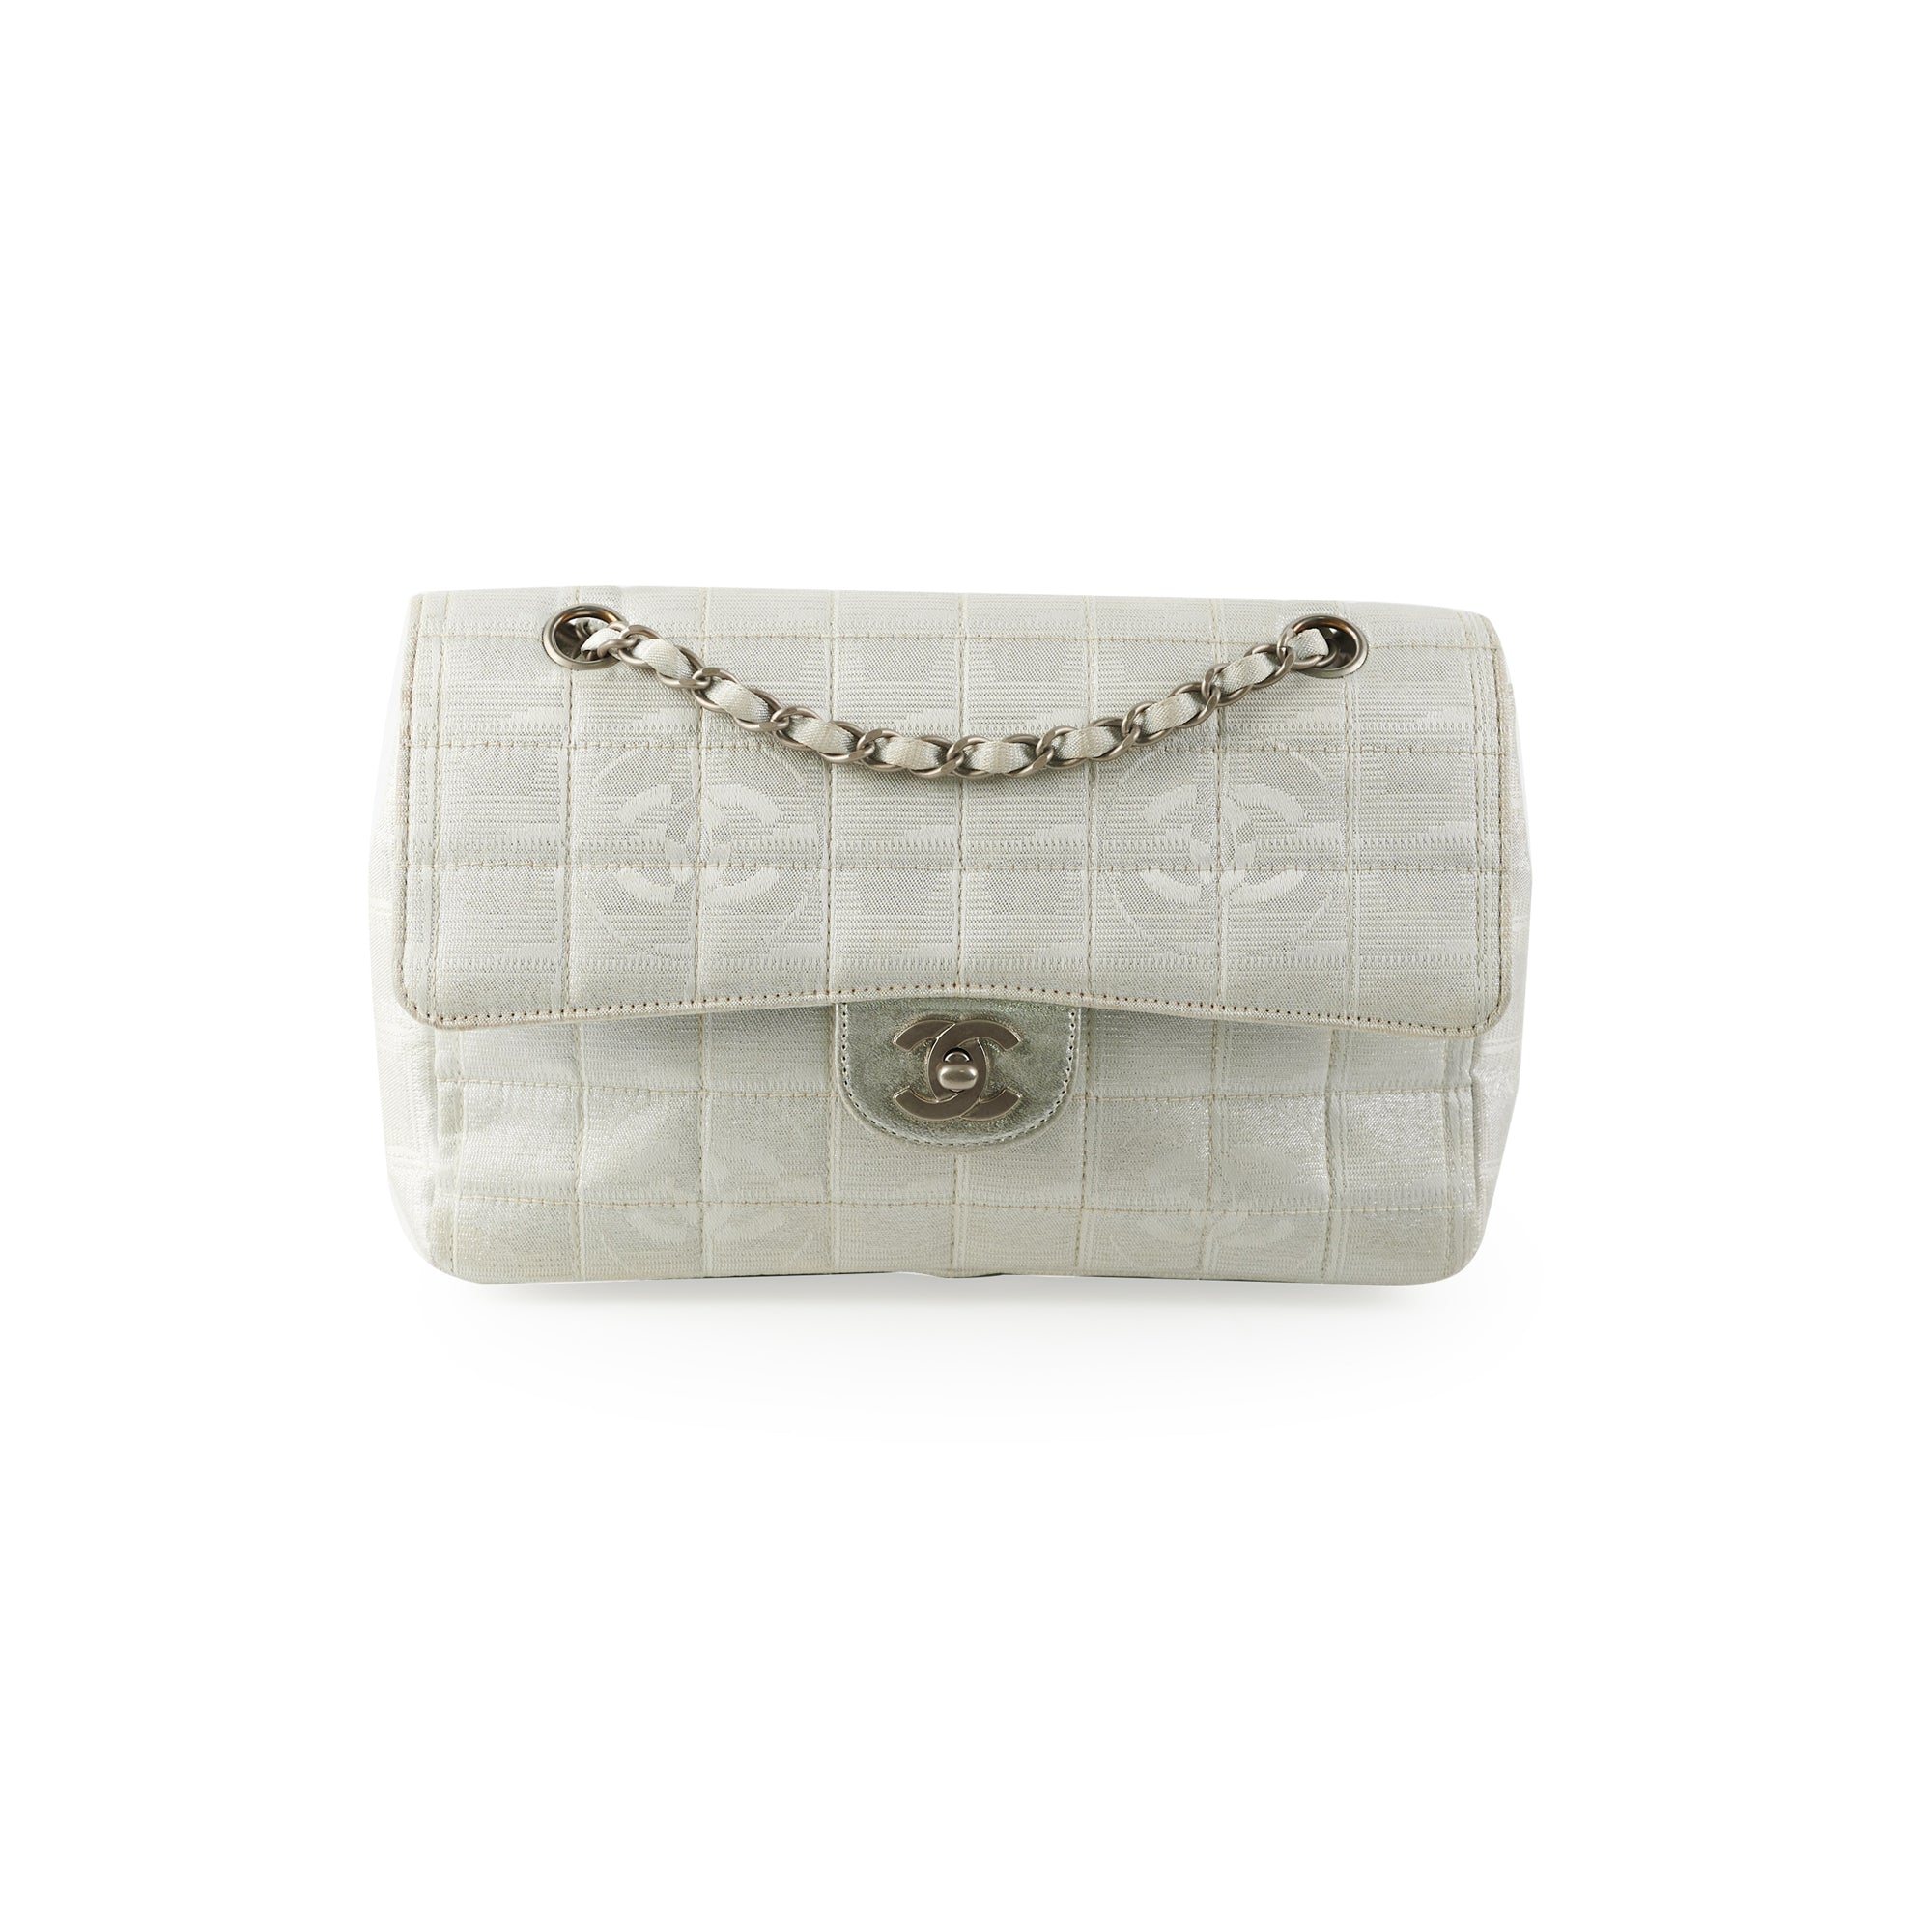 Handbags Chanel Chanel Travel Line Handbag Beige Silver Authentic Chanel Travel Line Canvas Handbag.